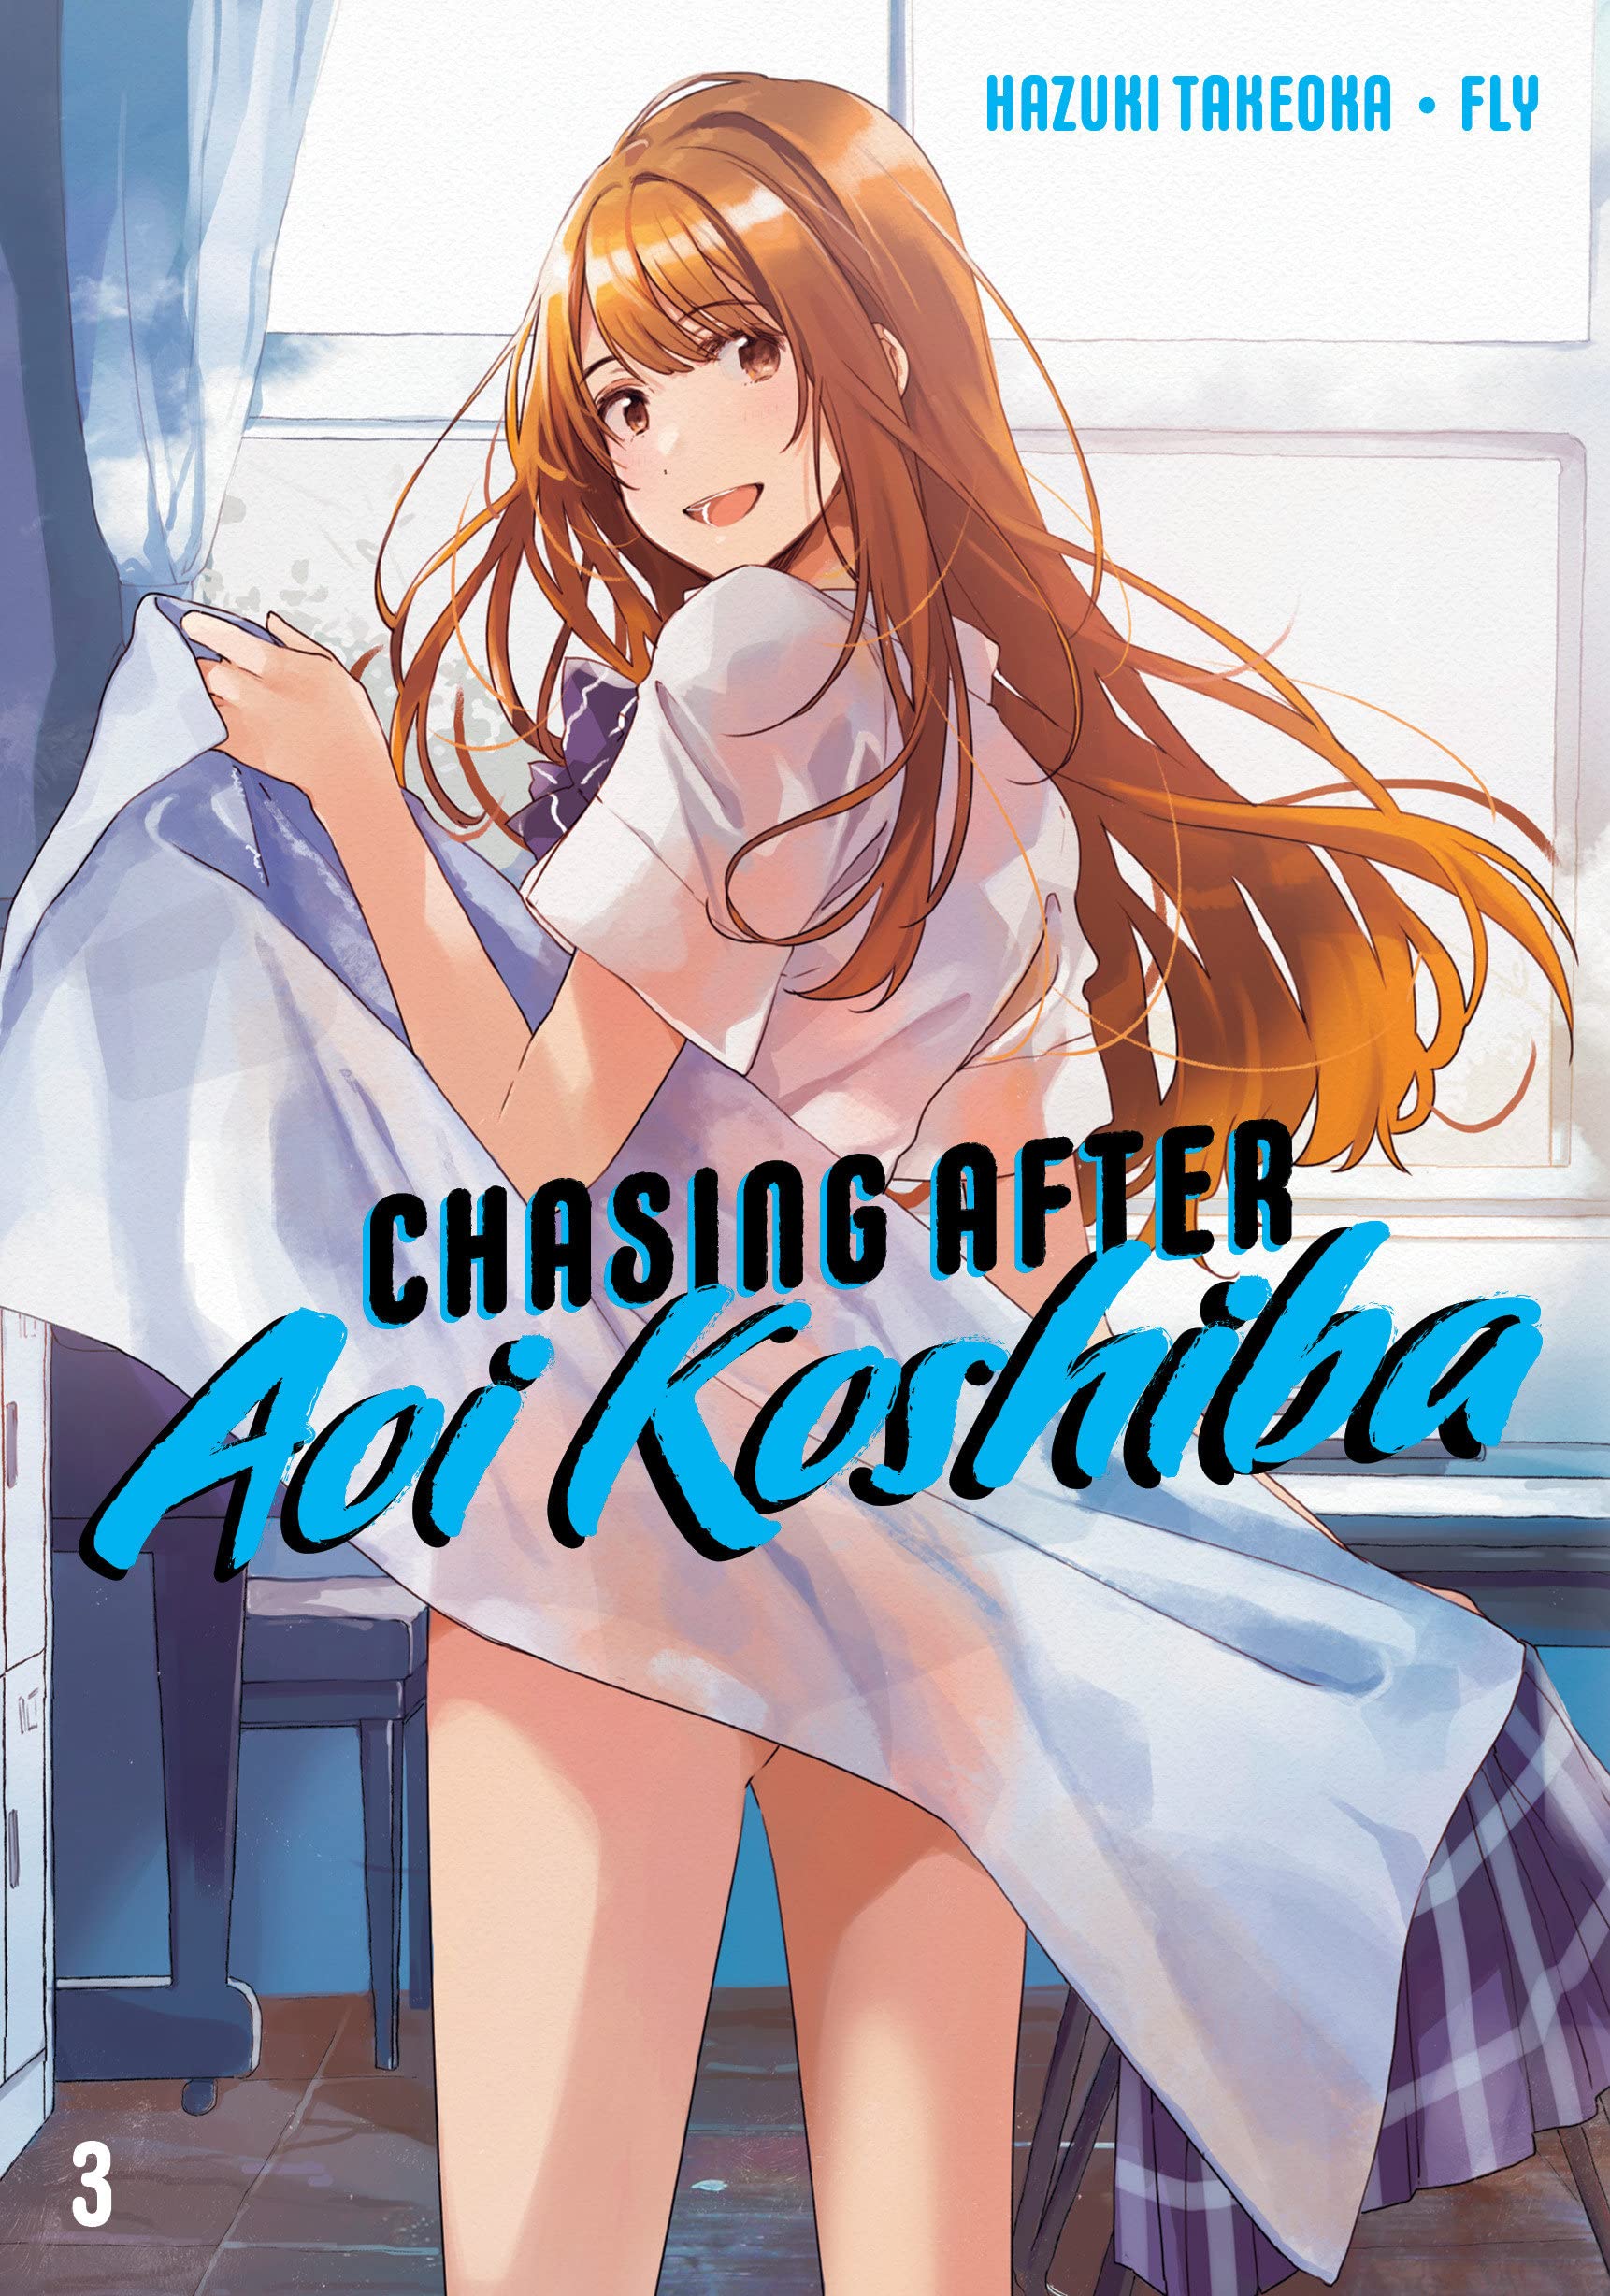 Chasing After Aoi Koshiba - Volume 3